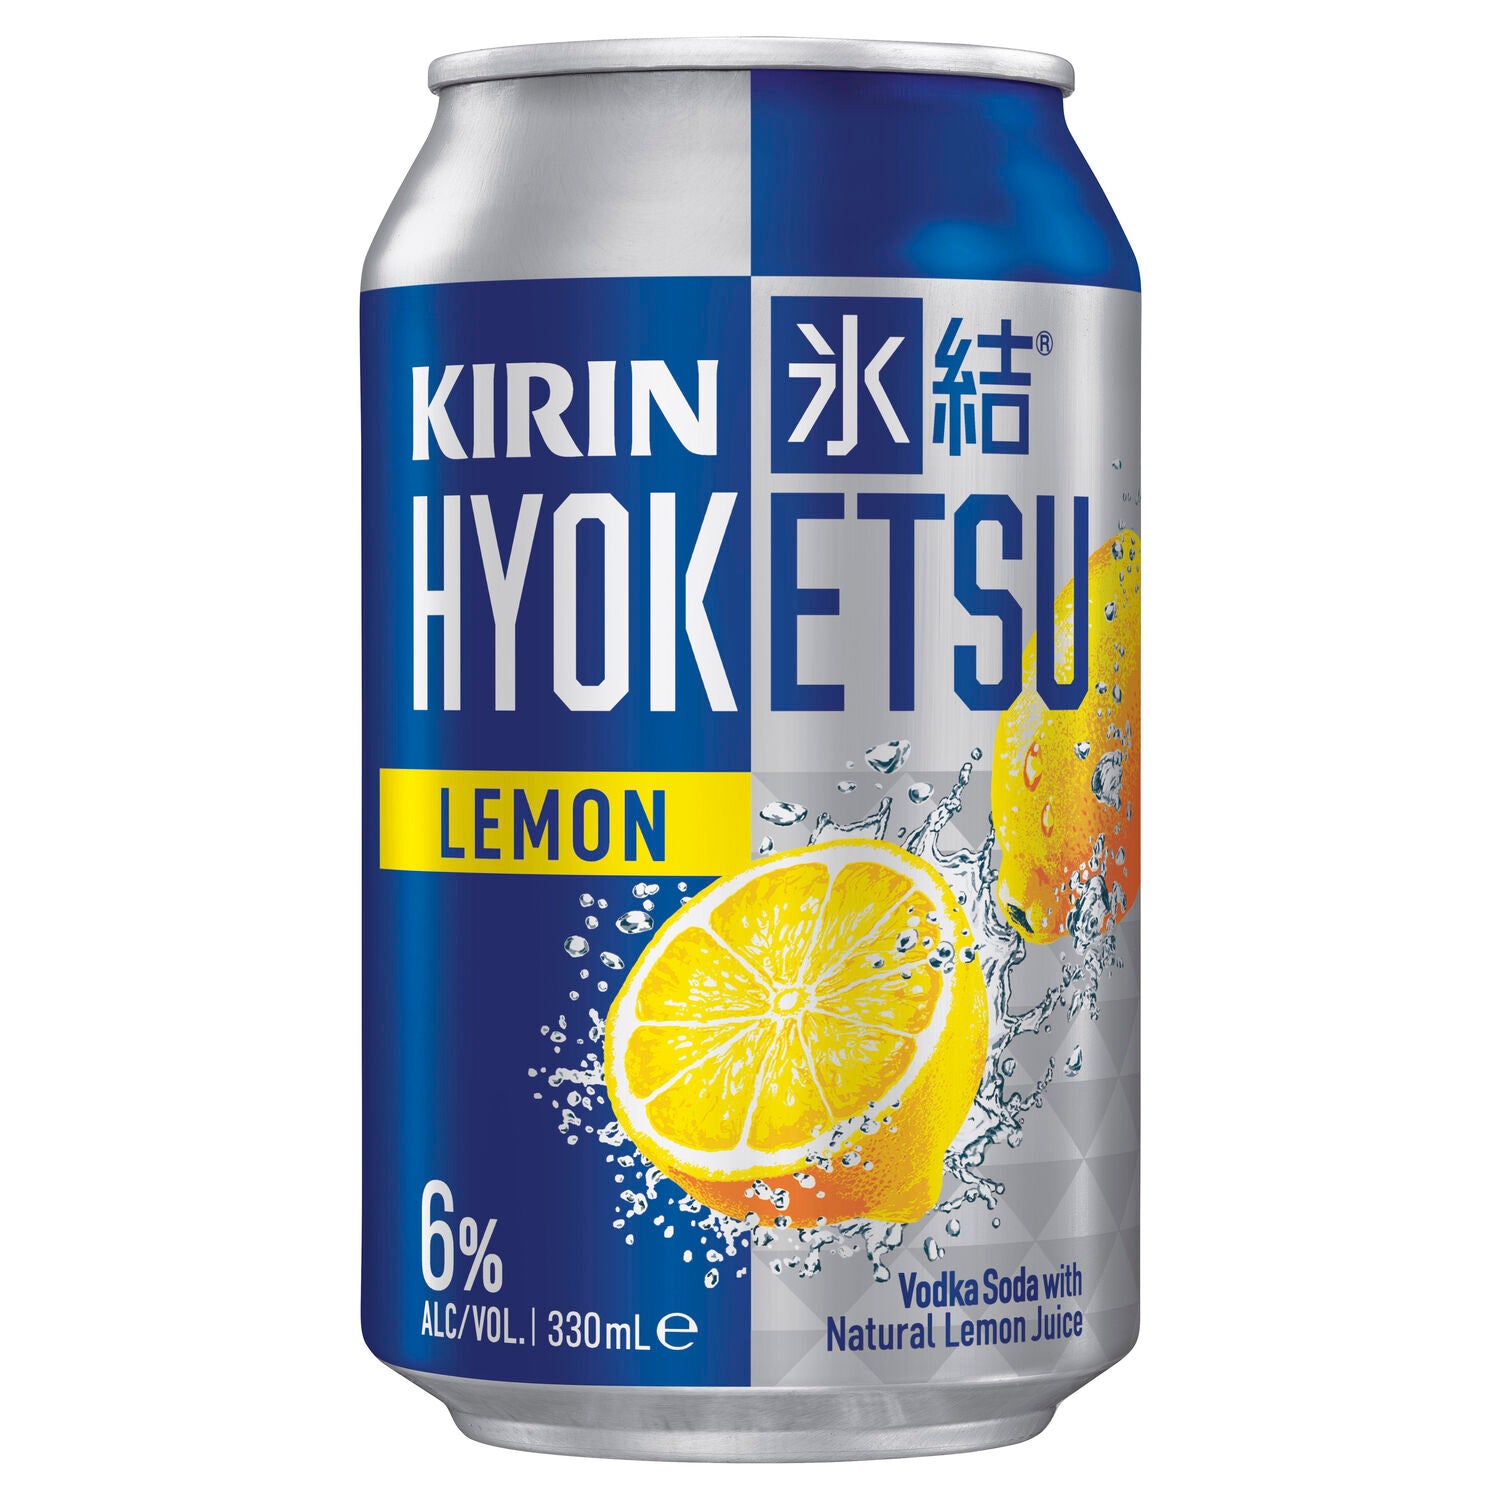 Kirin Hyoketsu Lemon 330mL Can